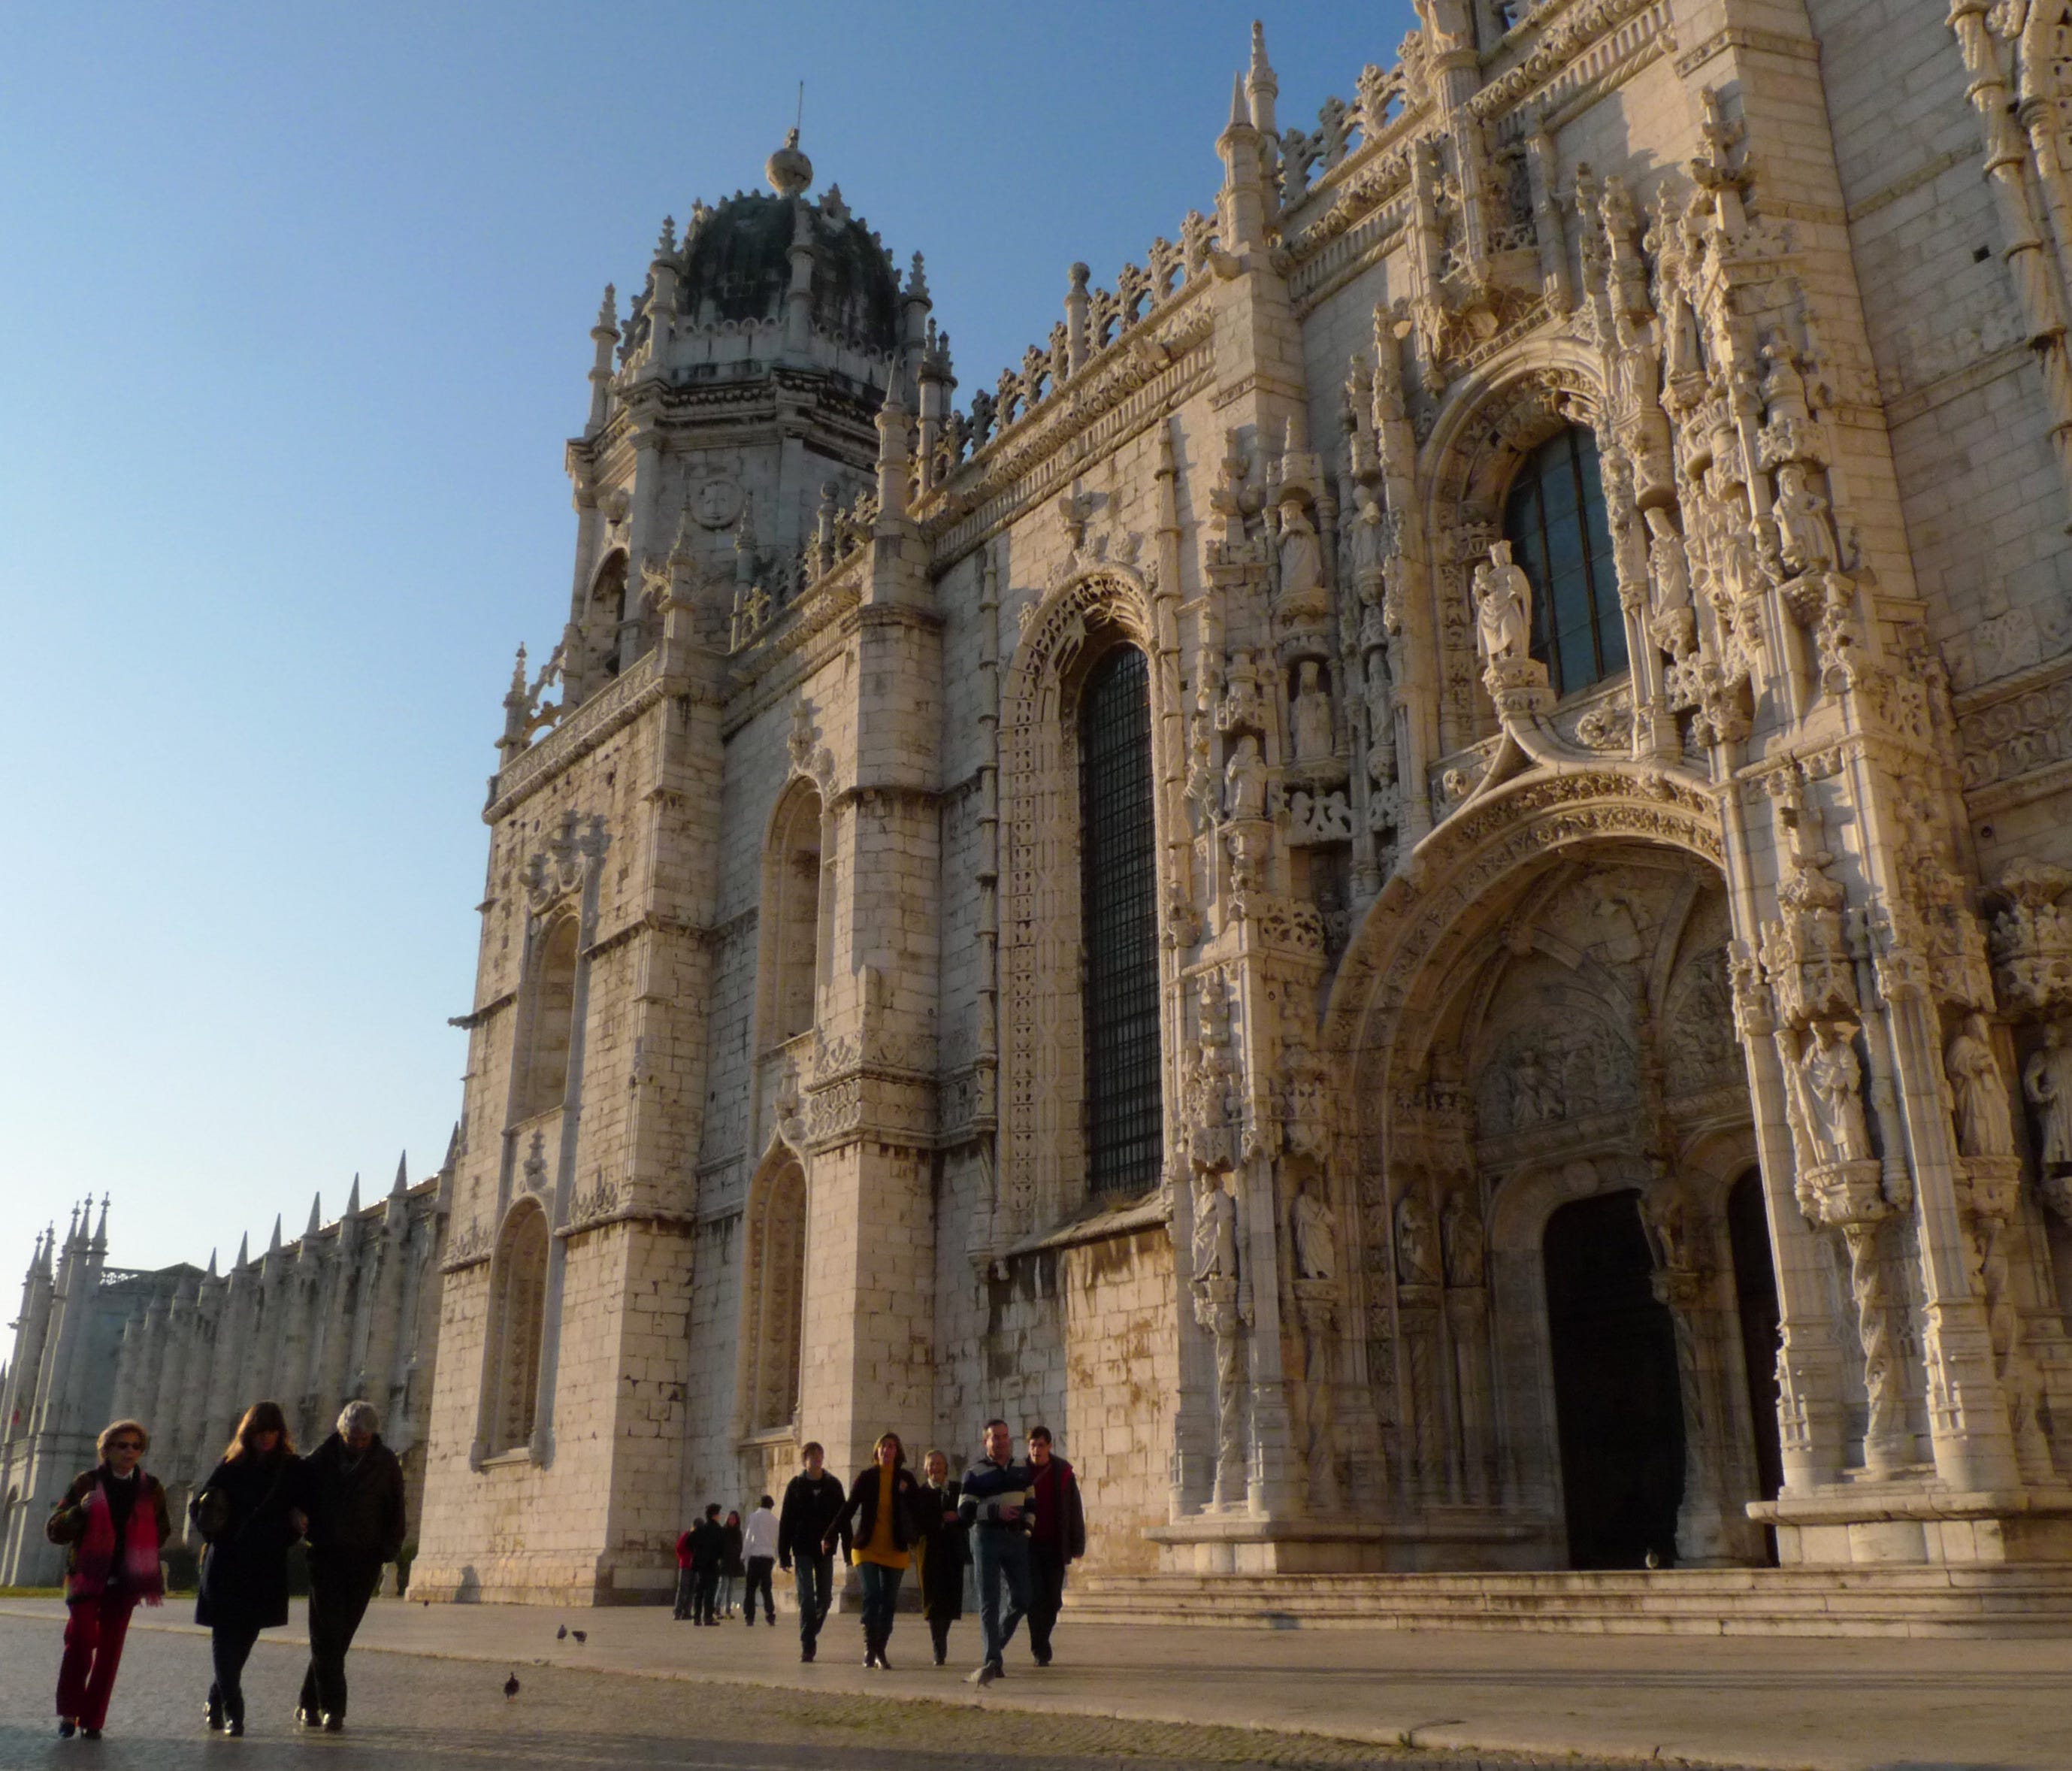 People walk past the 16th century Jeronimos Monastery in Lisbon.